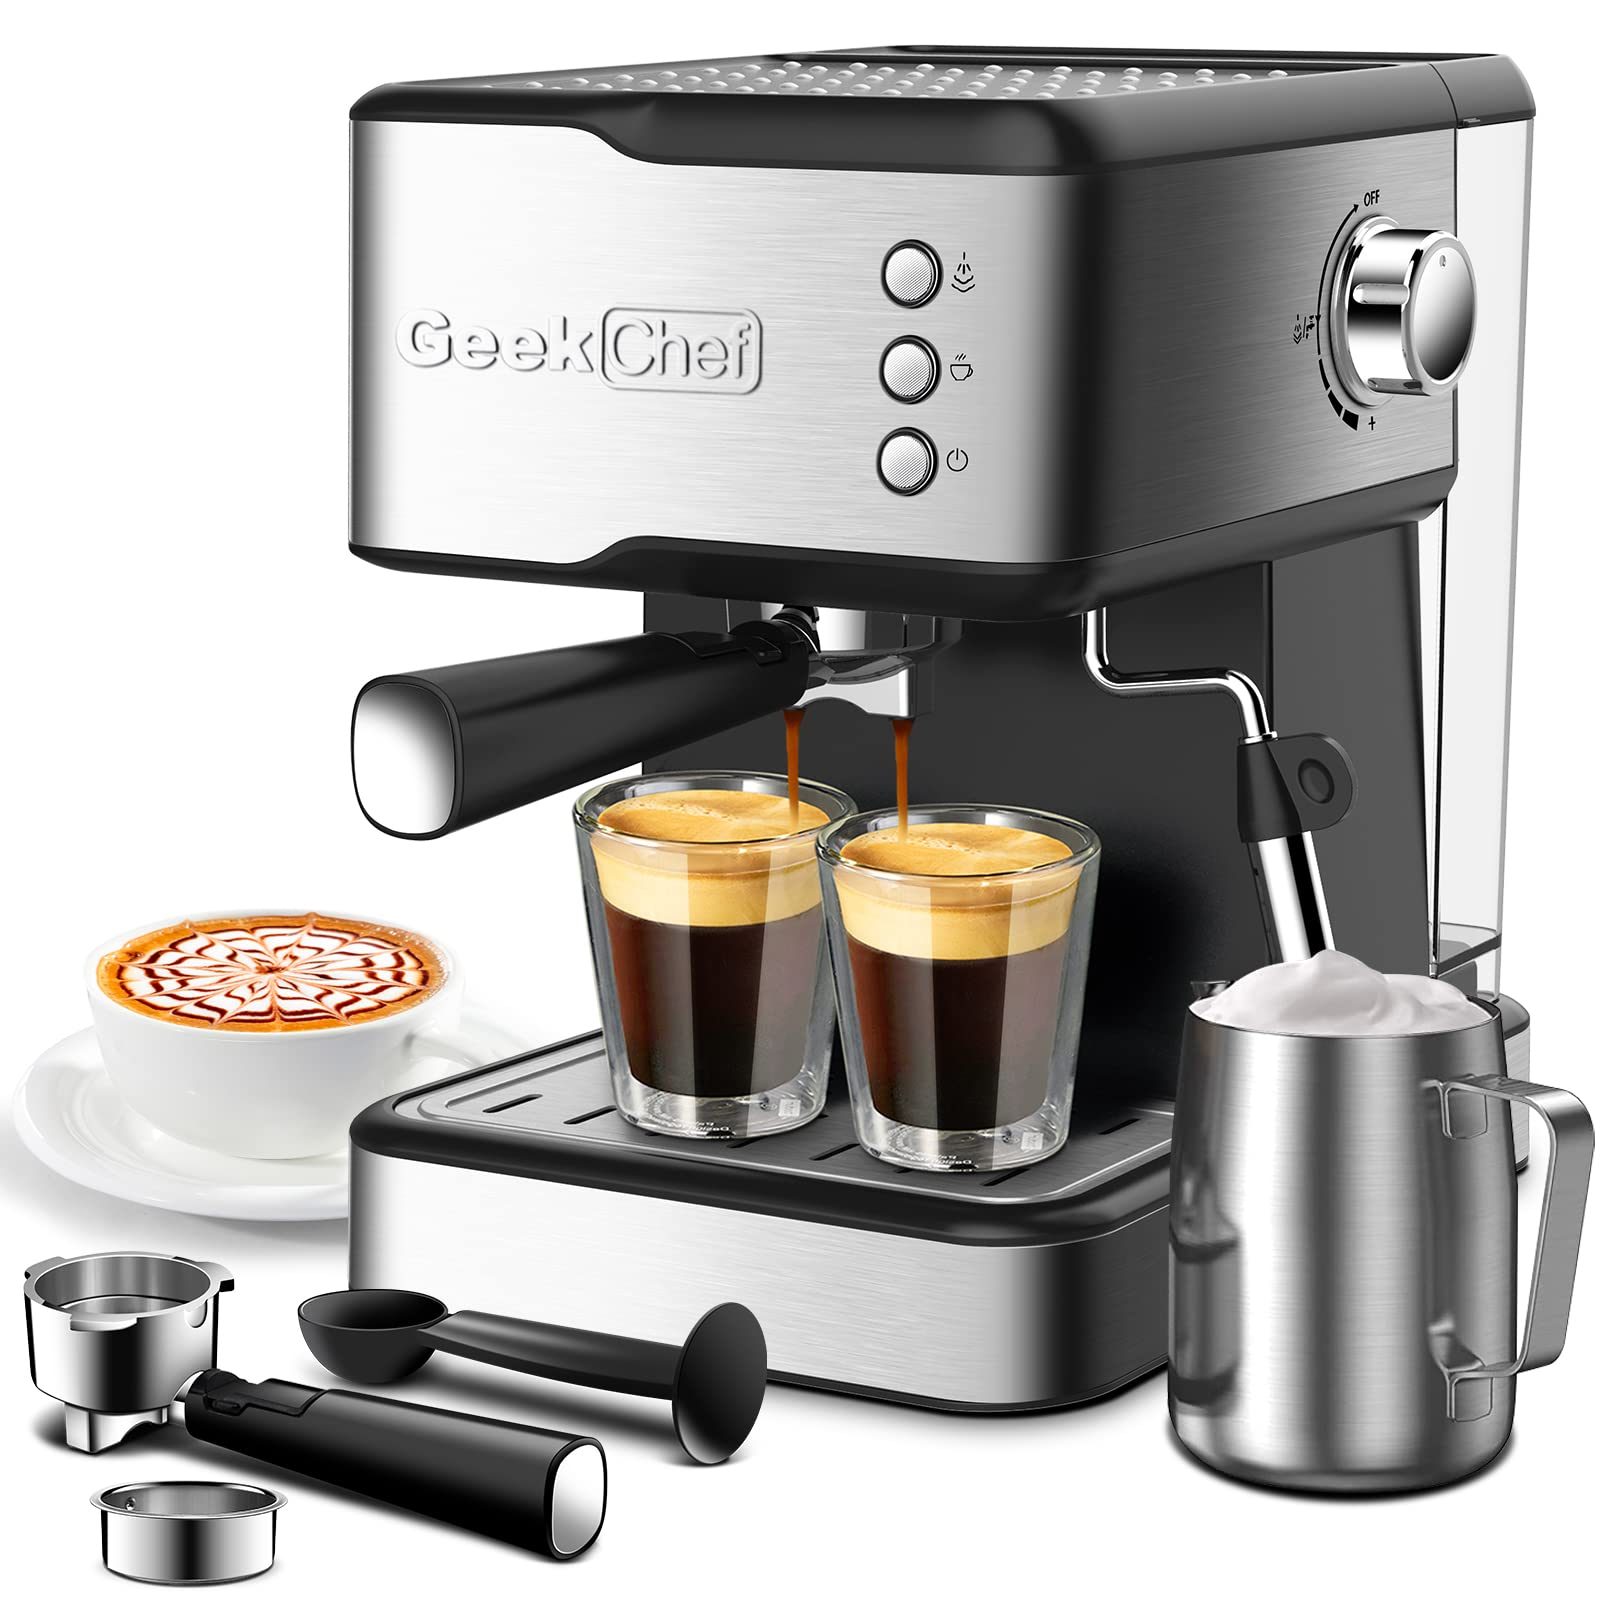 Geek Chef Espresso Machine Coffee Machine with Milk Frother Steam Wand, 20 Bar Pump Pressure Espresso and Cappuccino latte Maker, 1.5L Water Tank, ...